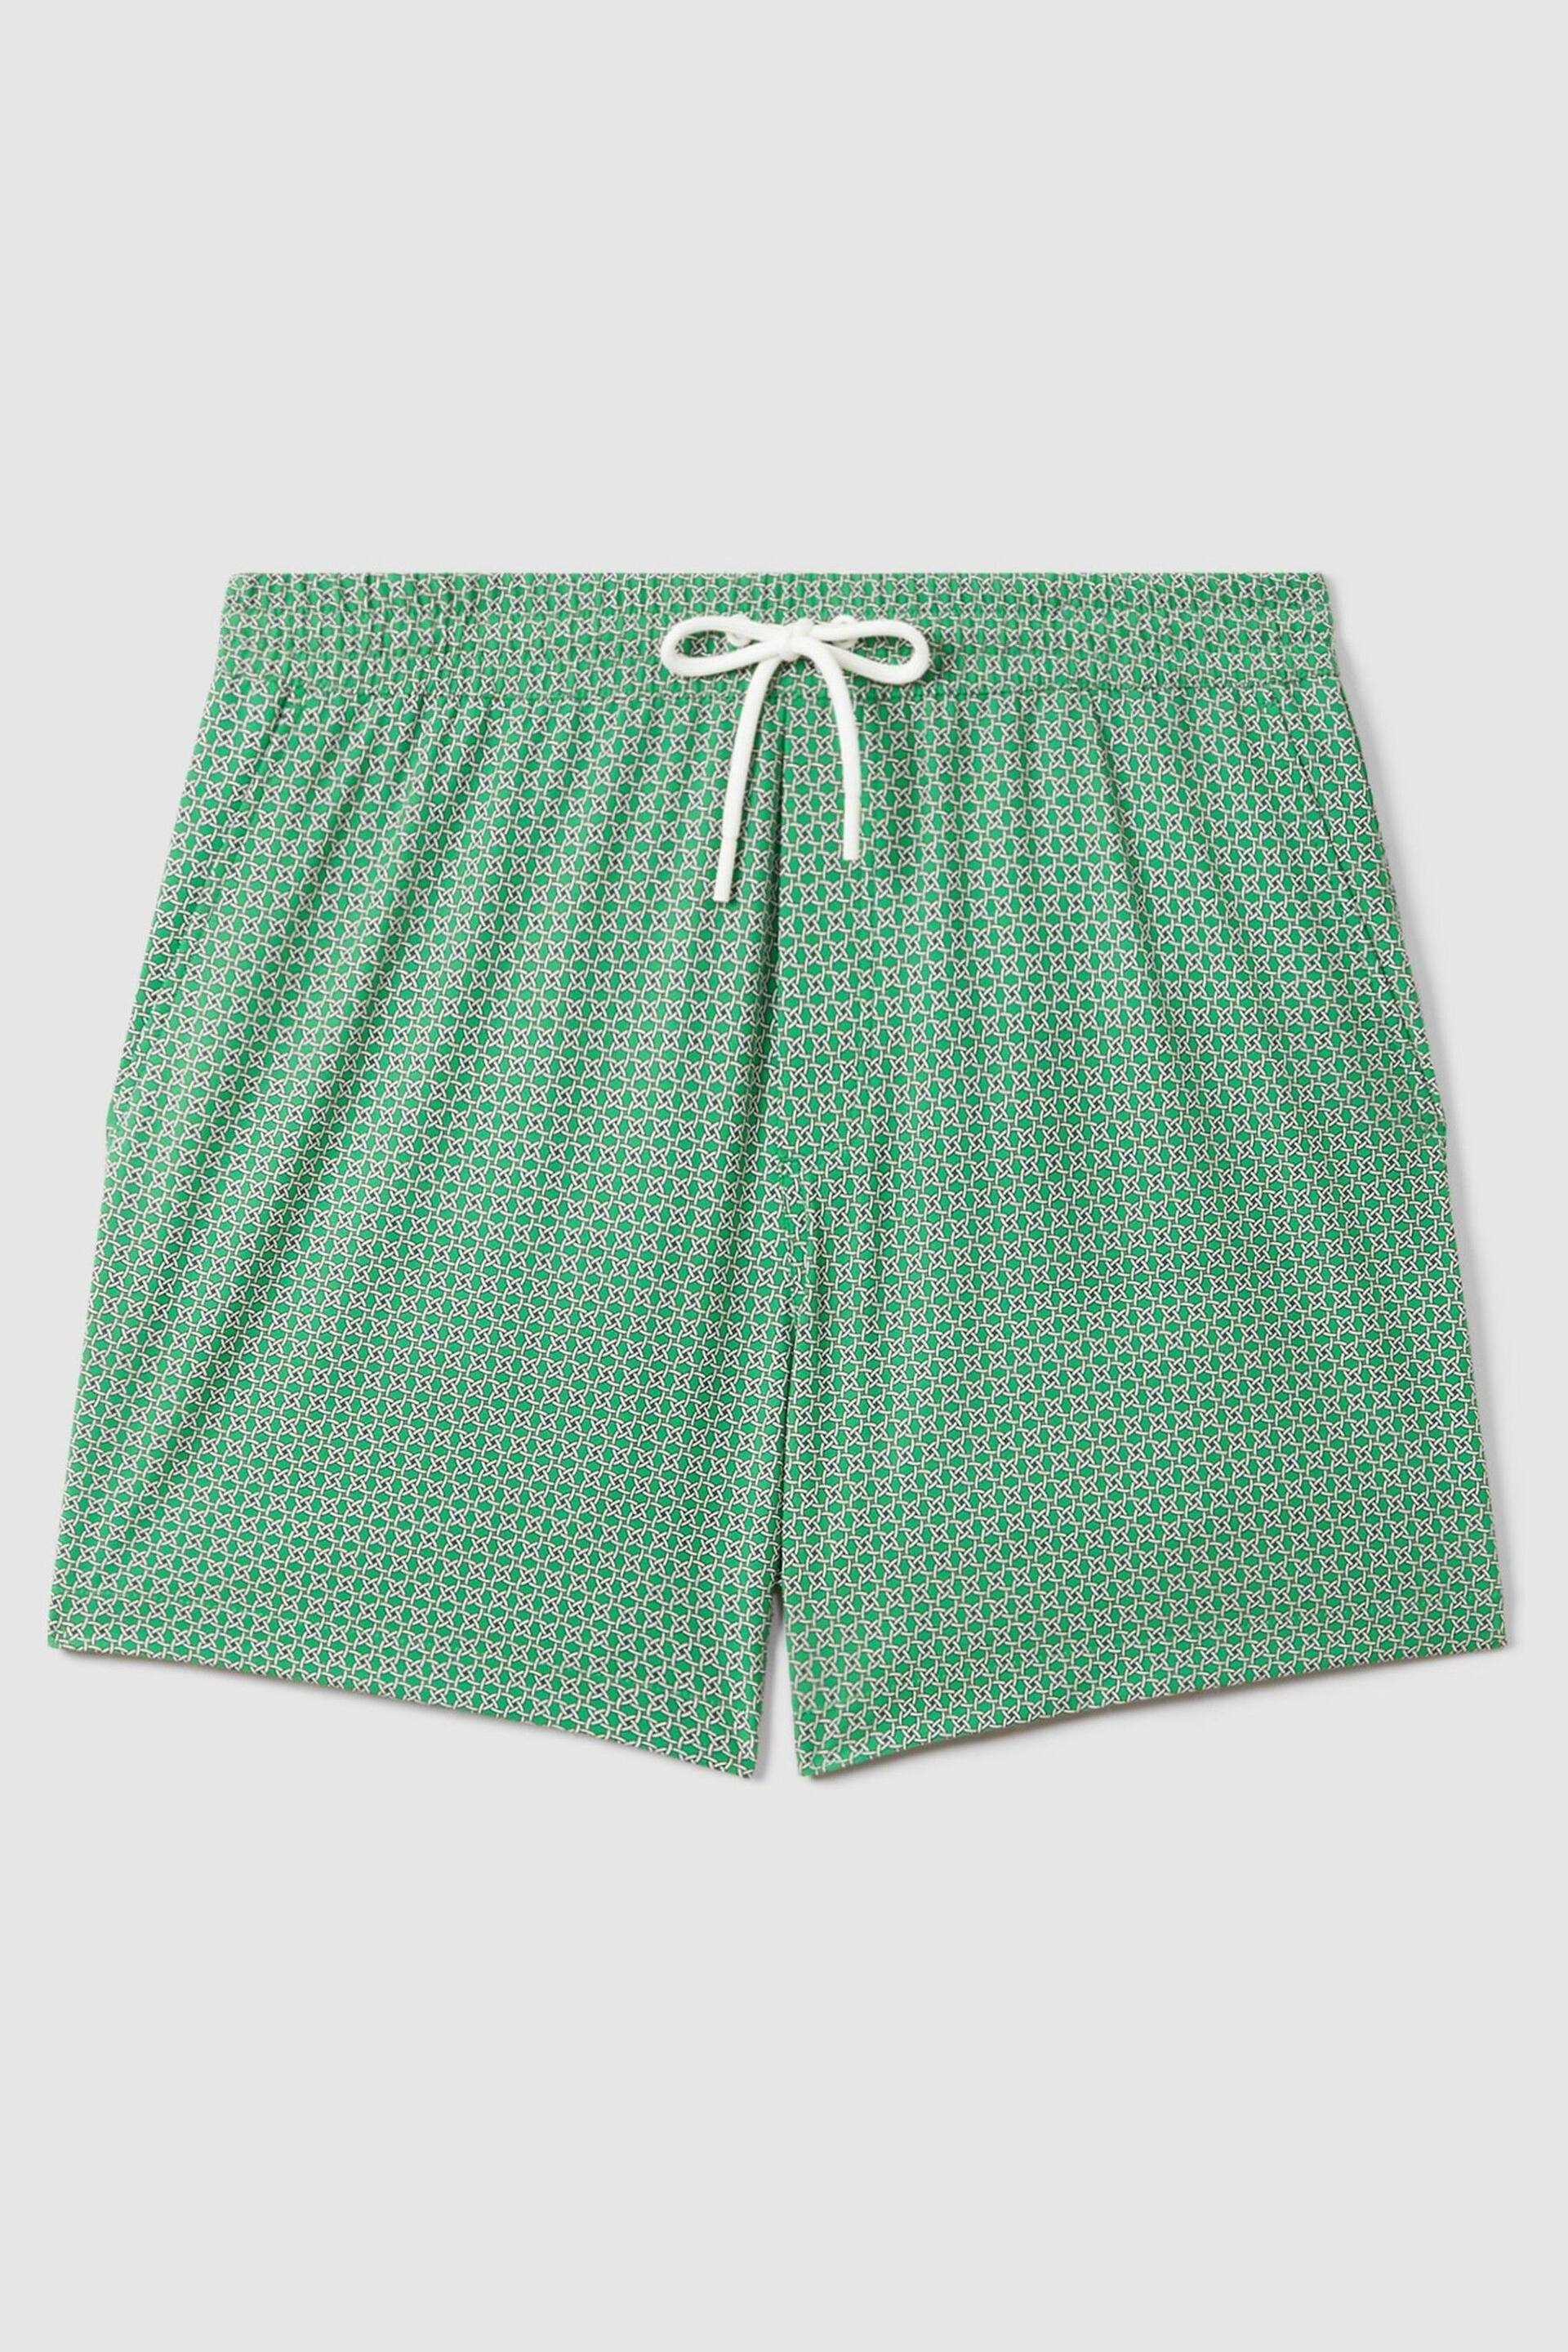 Reiss Bright Green/White Shape Printed Drawstring Swim Shorts - Image 2 of 6